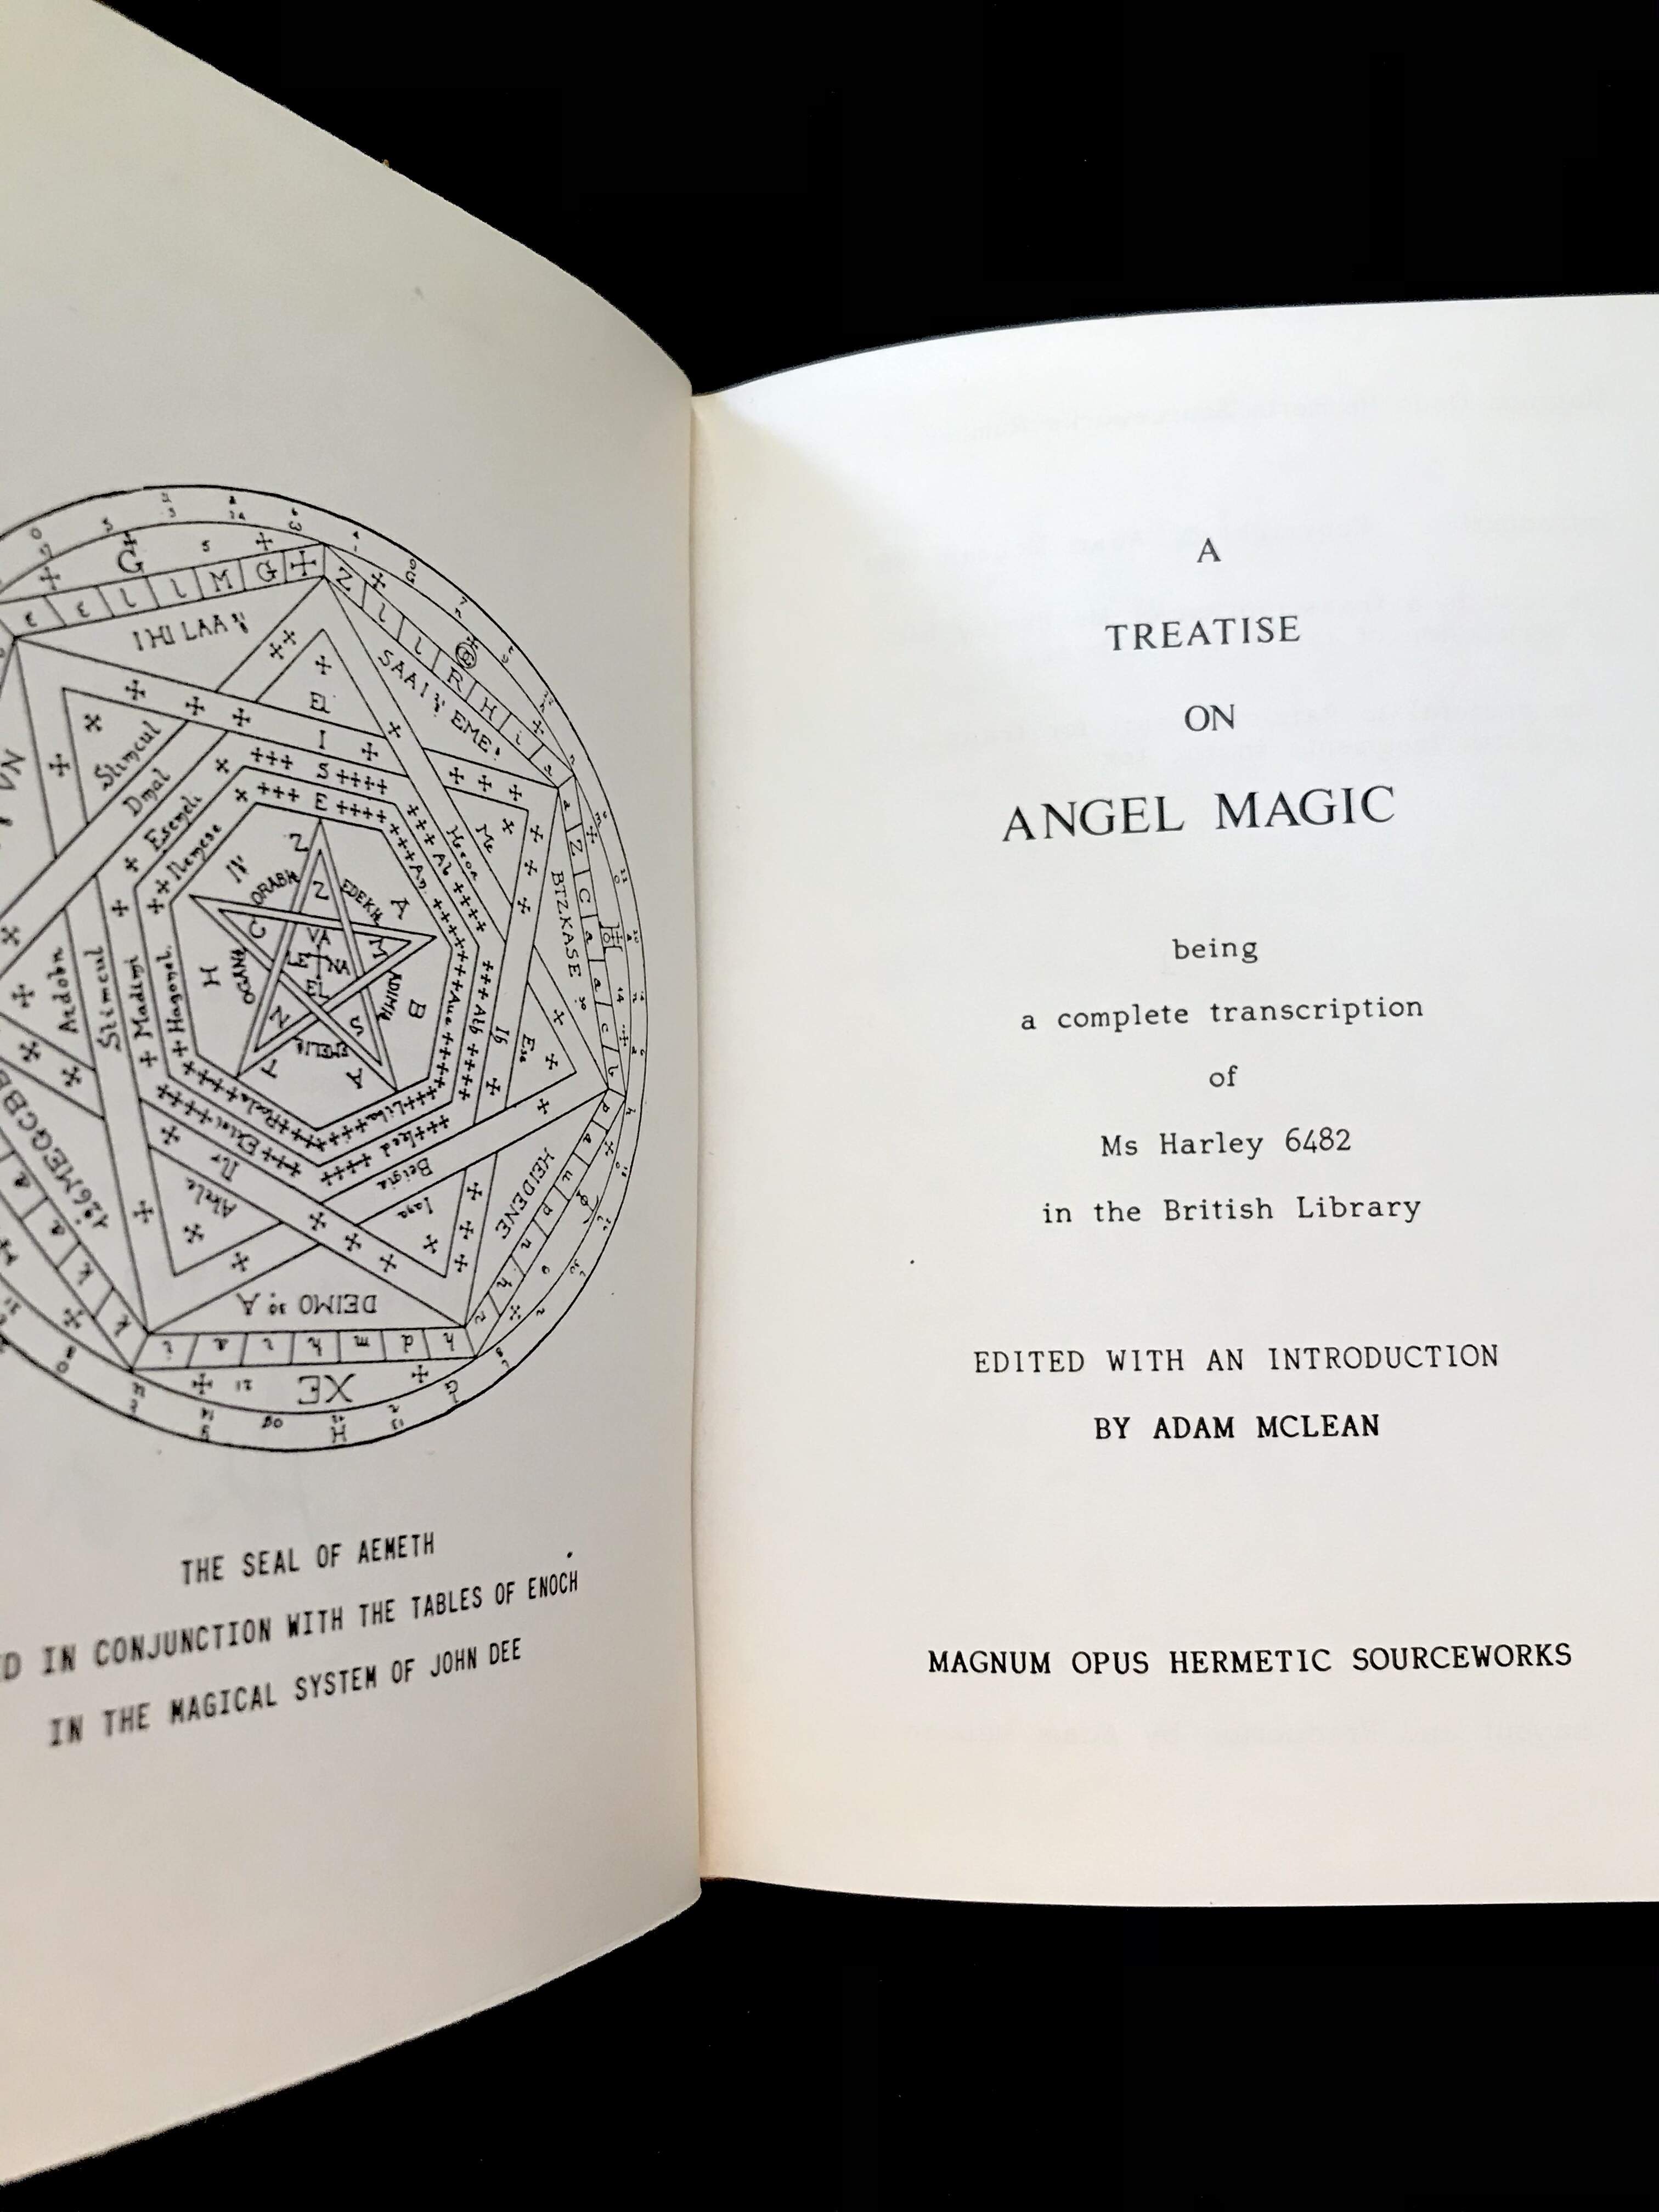 A Treatise On Angel Magic